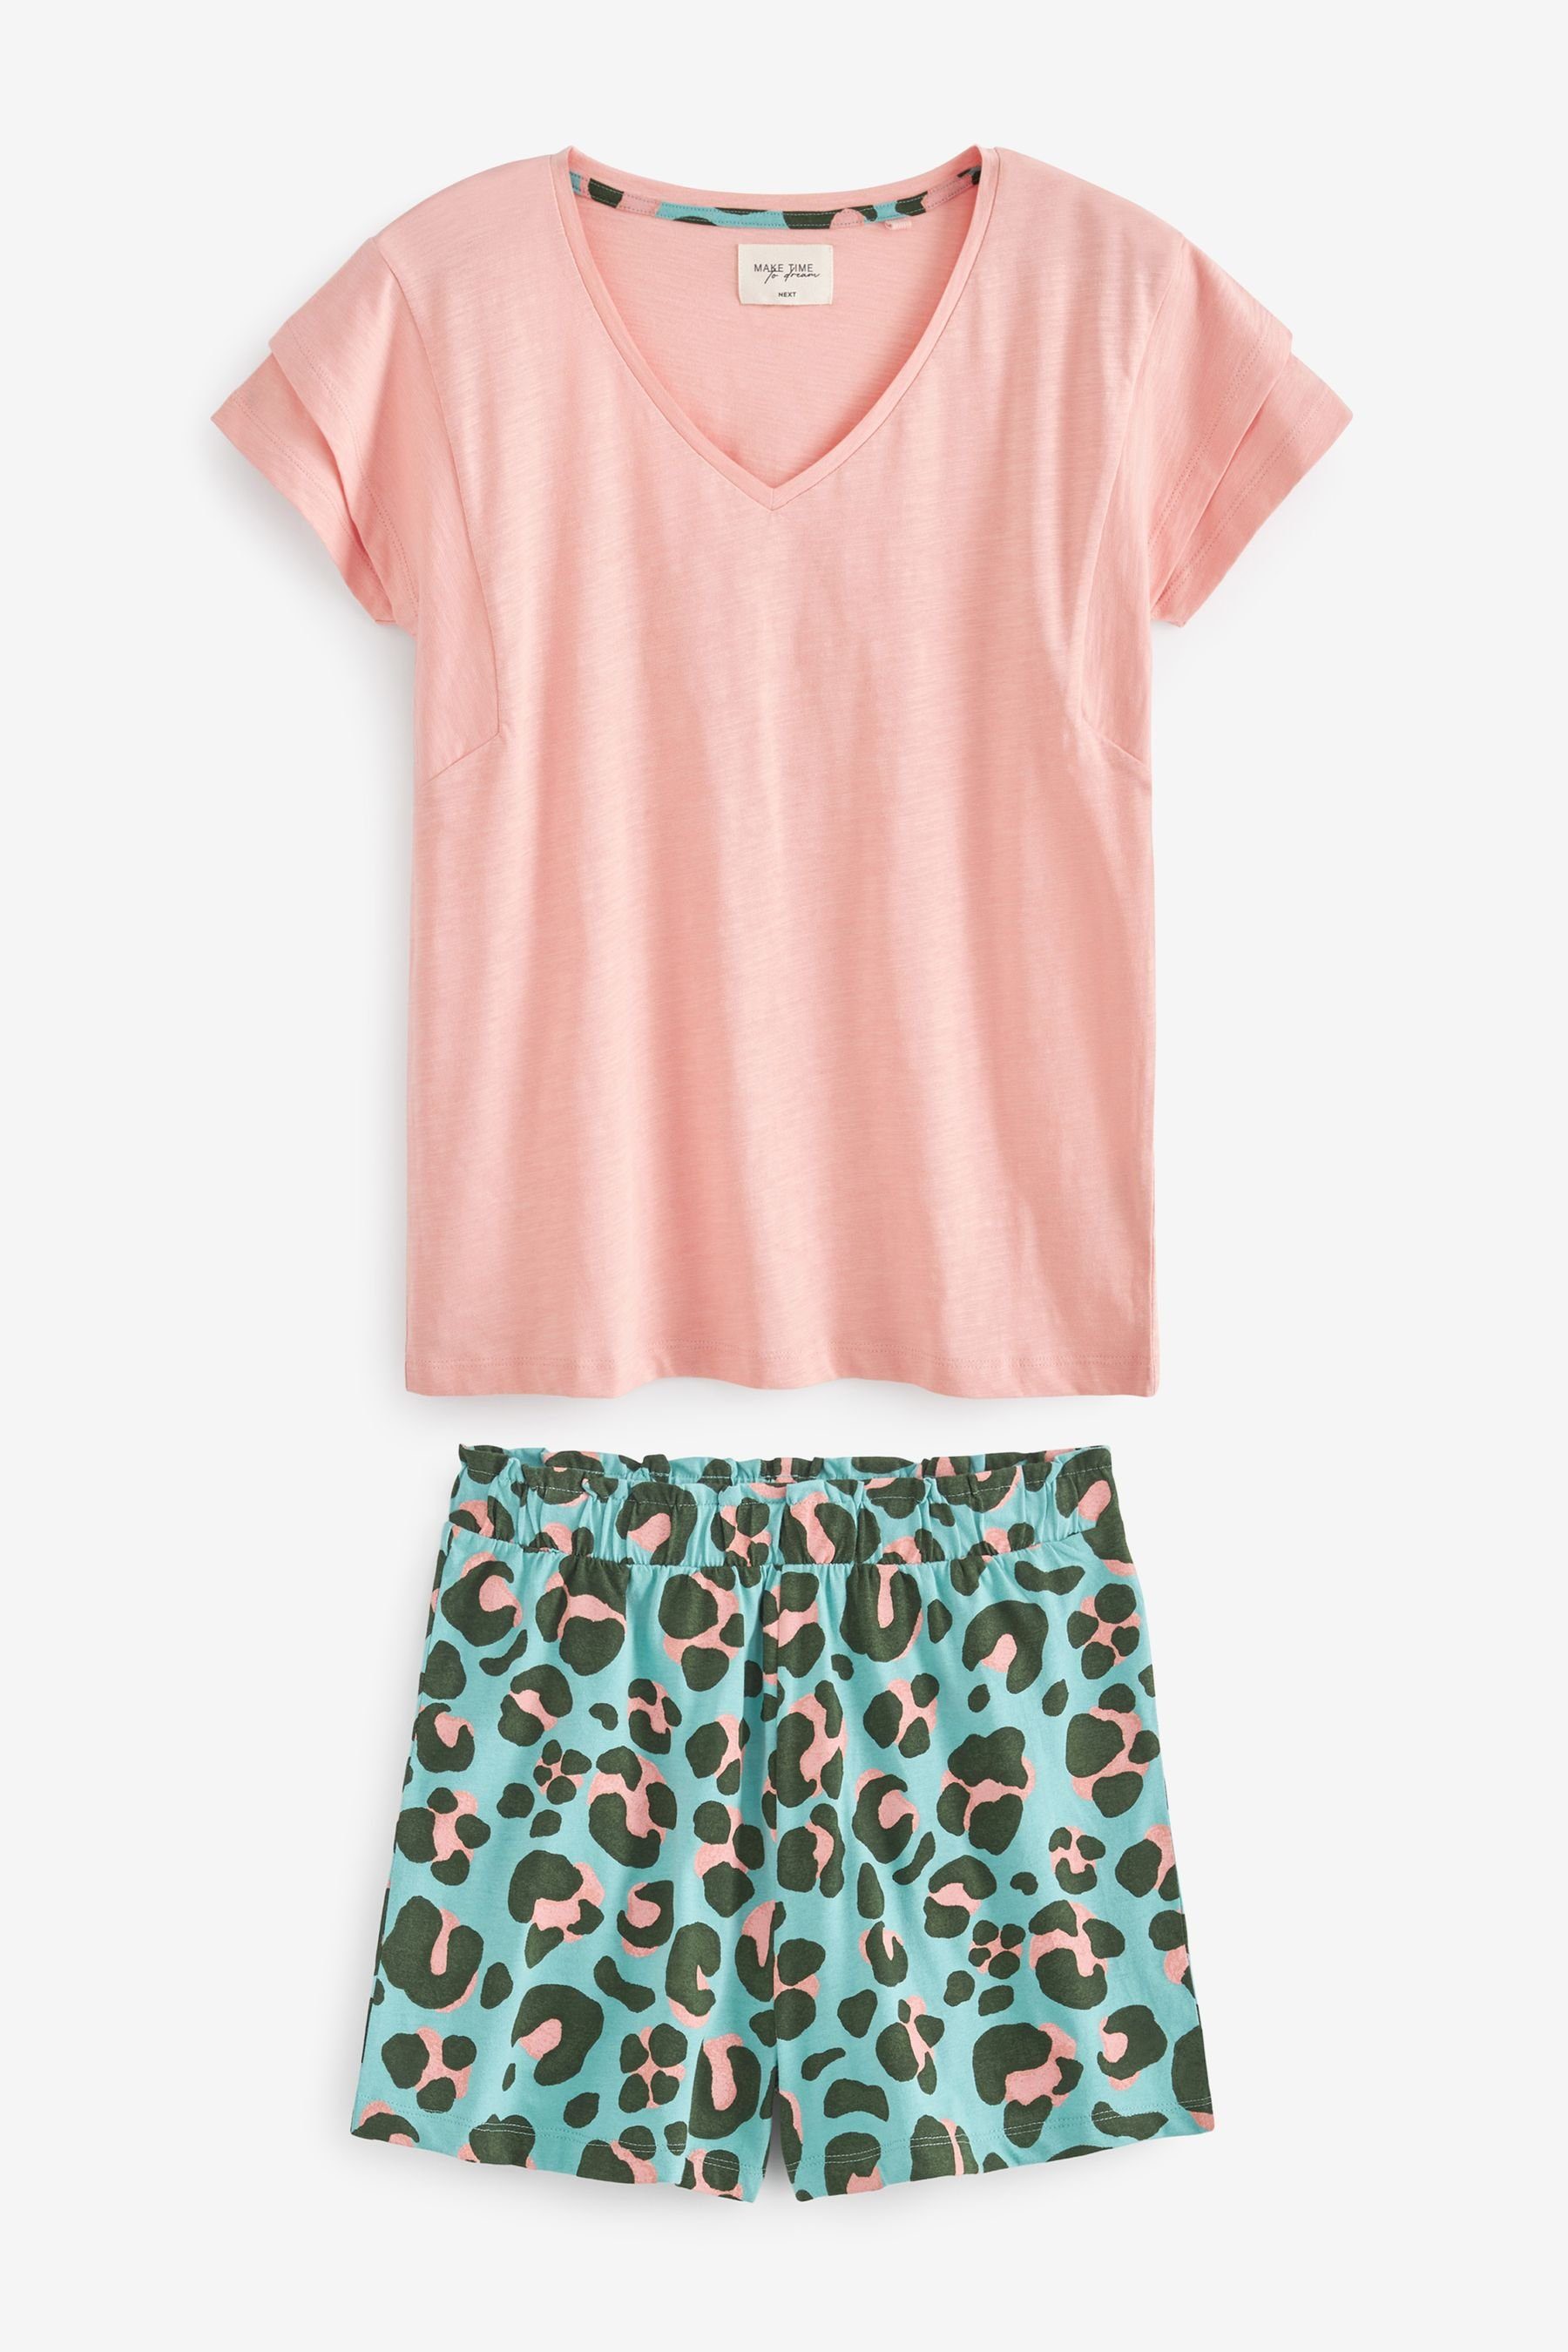 Leopard tlg) mit (2 Baumwolljersey-Pyjama Next Pyjama Pink/Teal Set Blue Shorts,